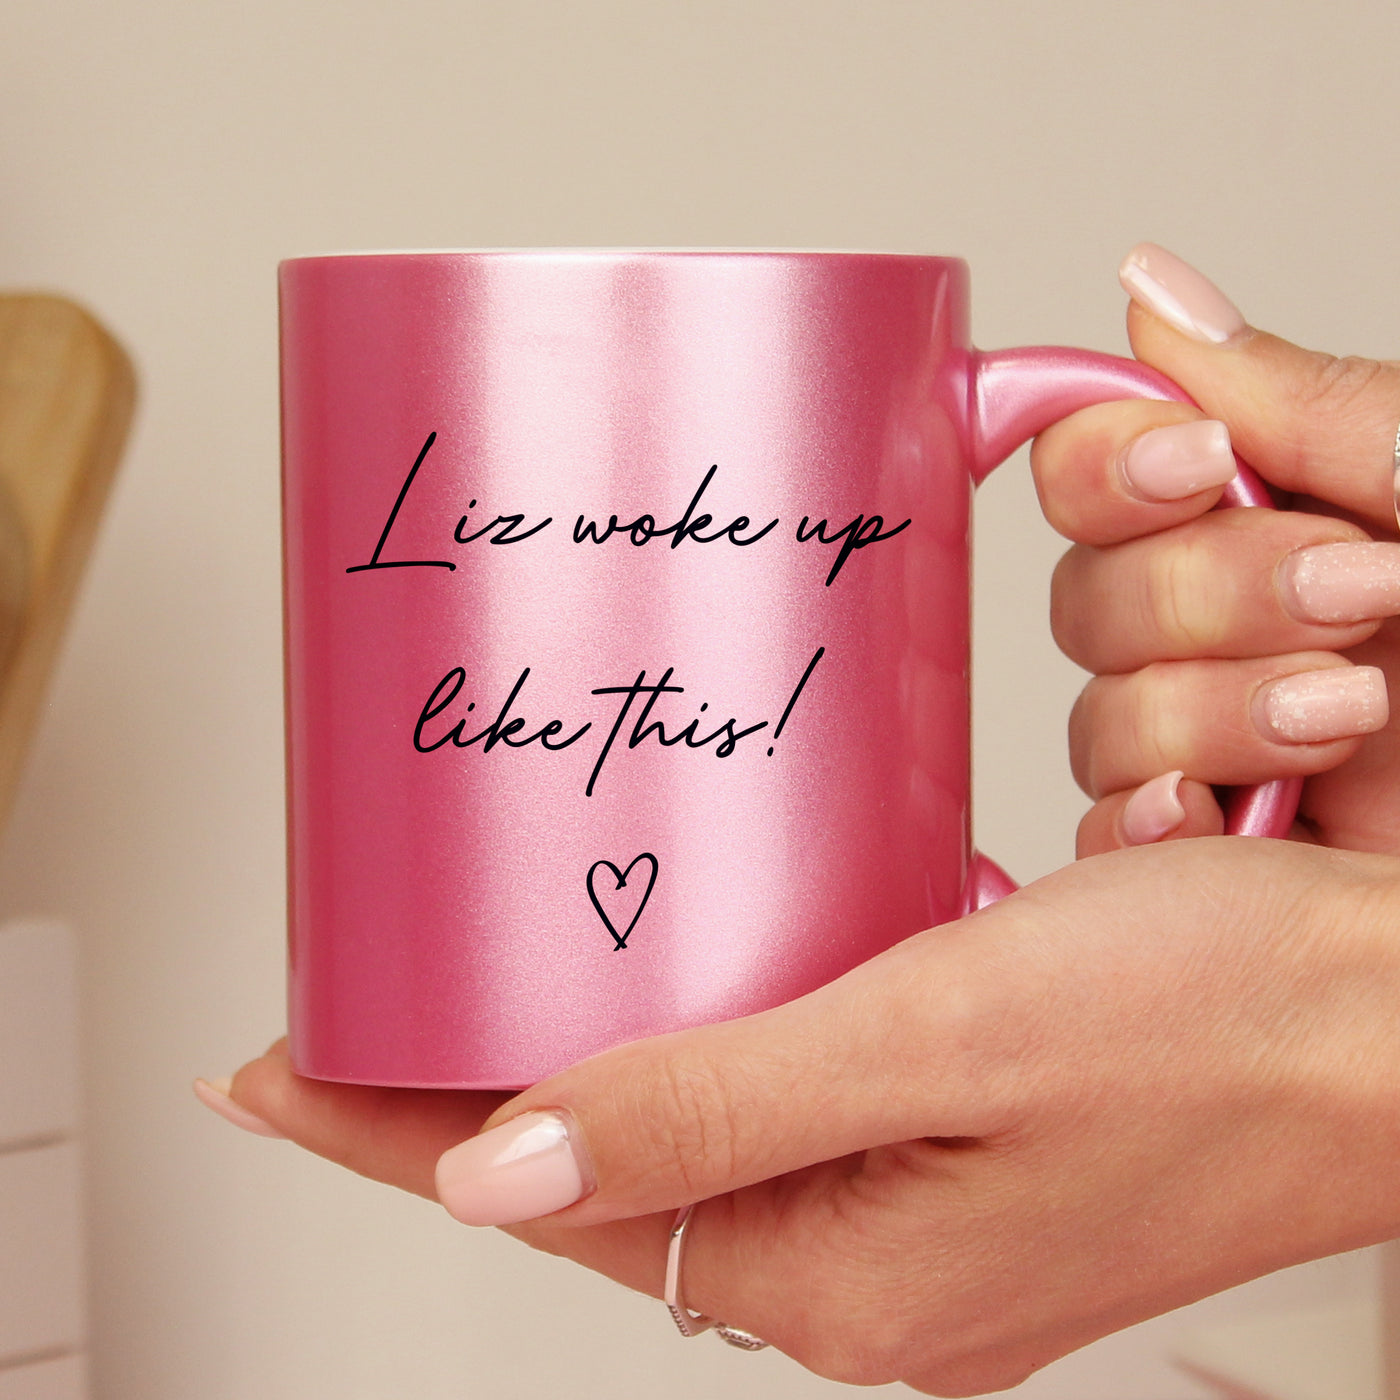 Personalised Pink Glitter Ceramic Mug